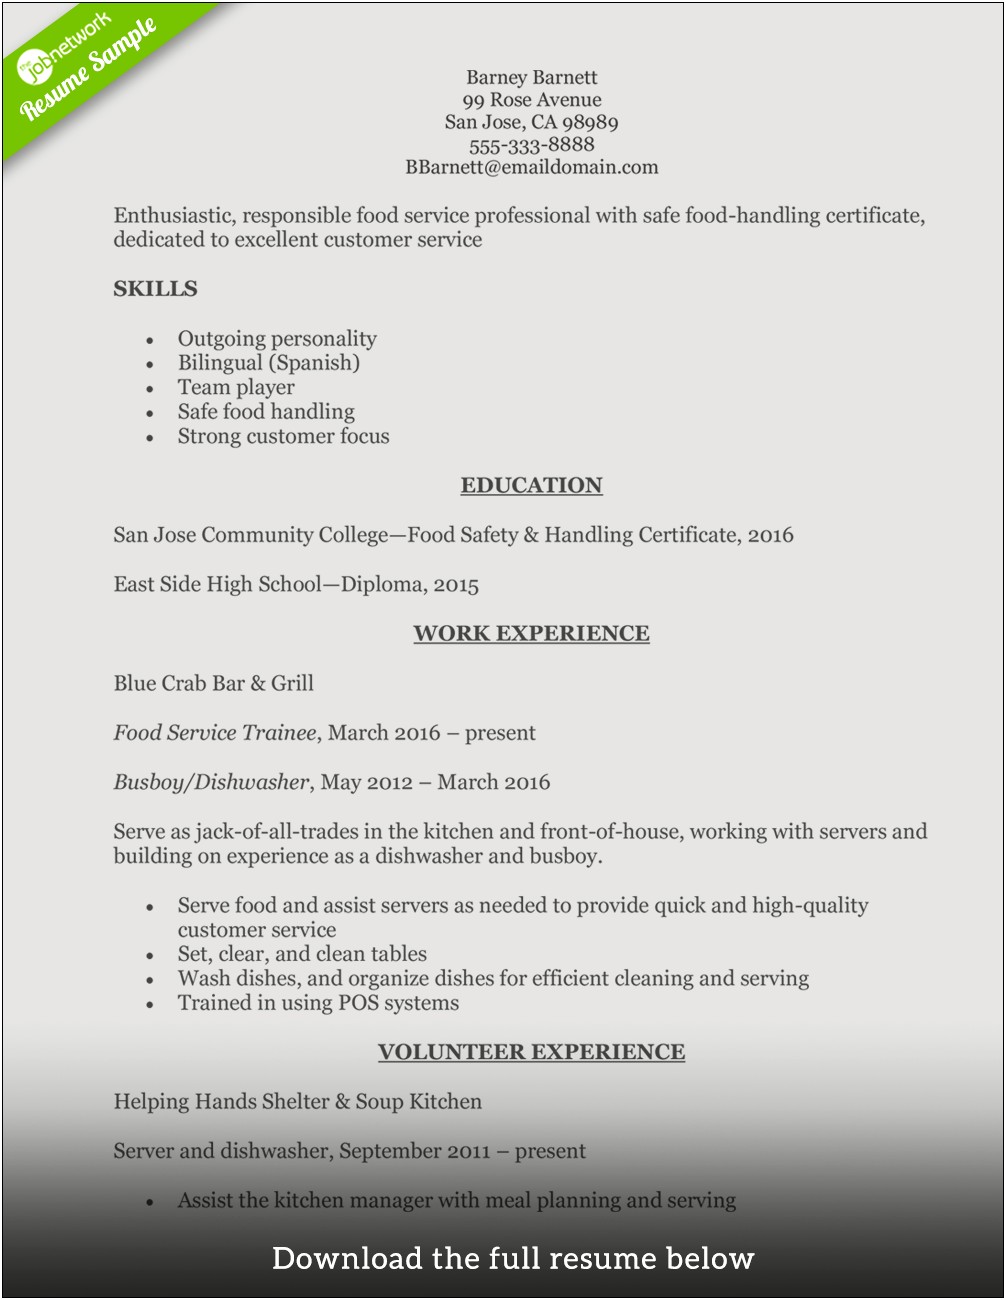 School Kitchen Manager Job Description Resume